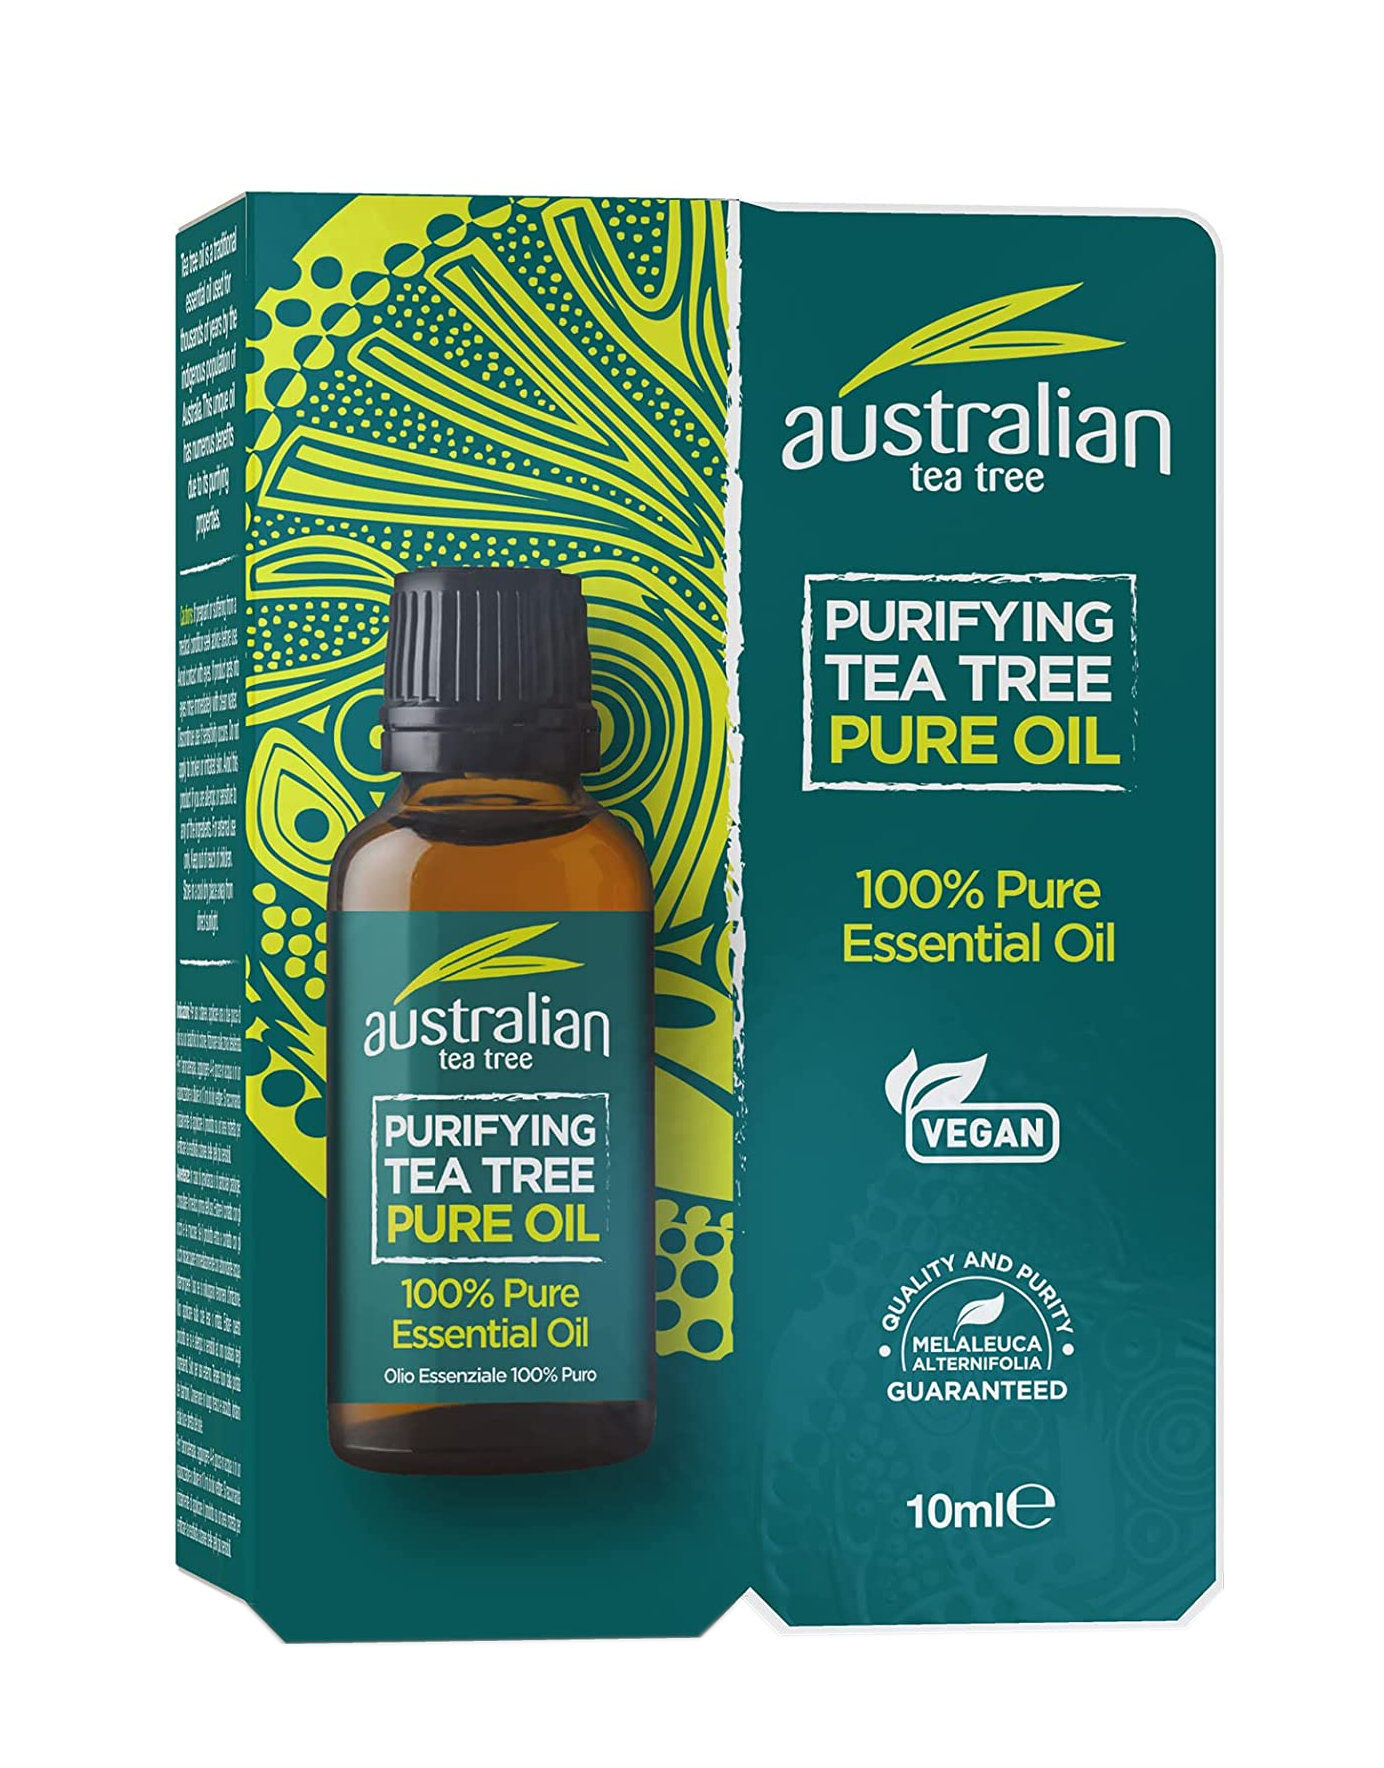 OPTIMA Australian Tea Tree - Purifying Tea Tree Pure Oil 10ml